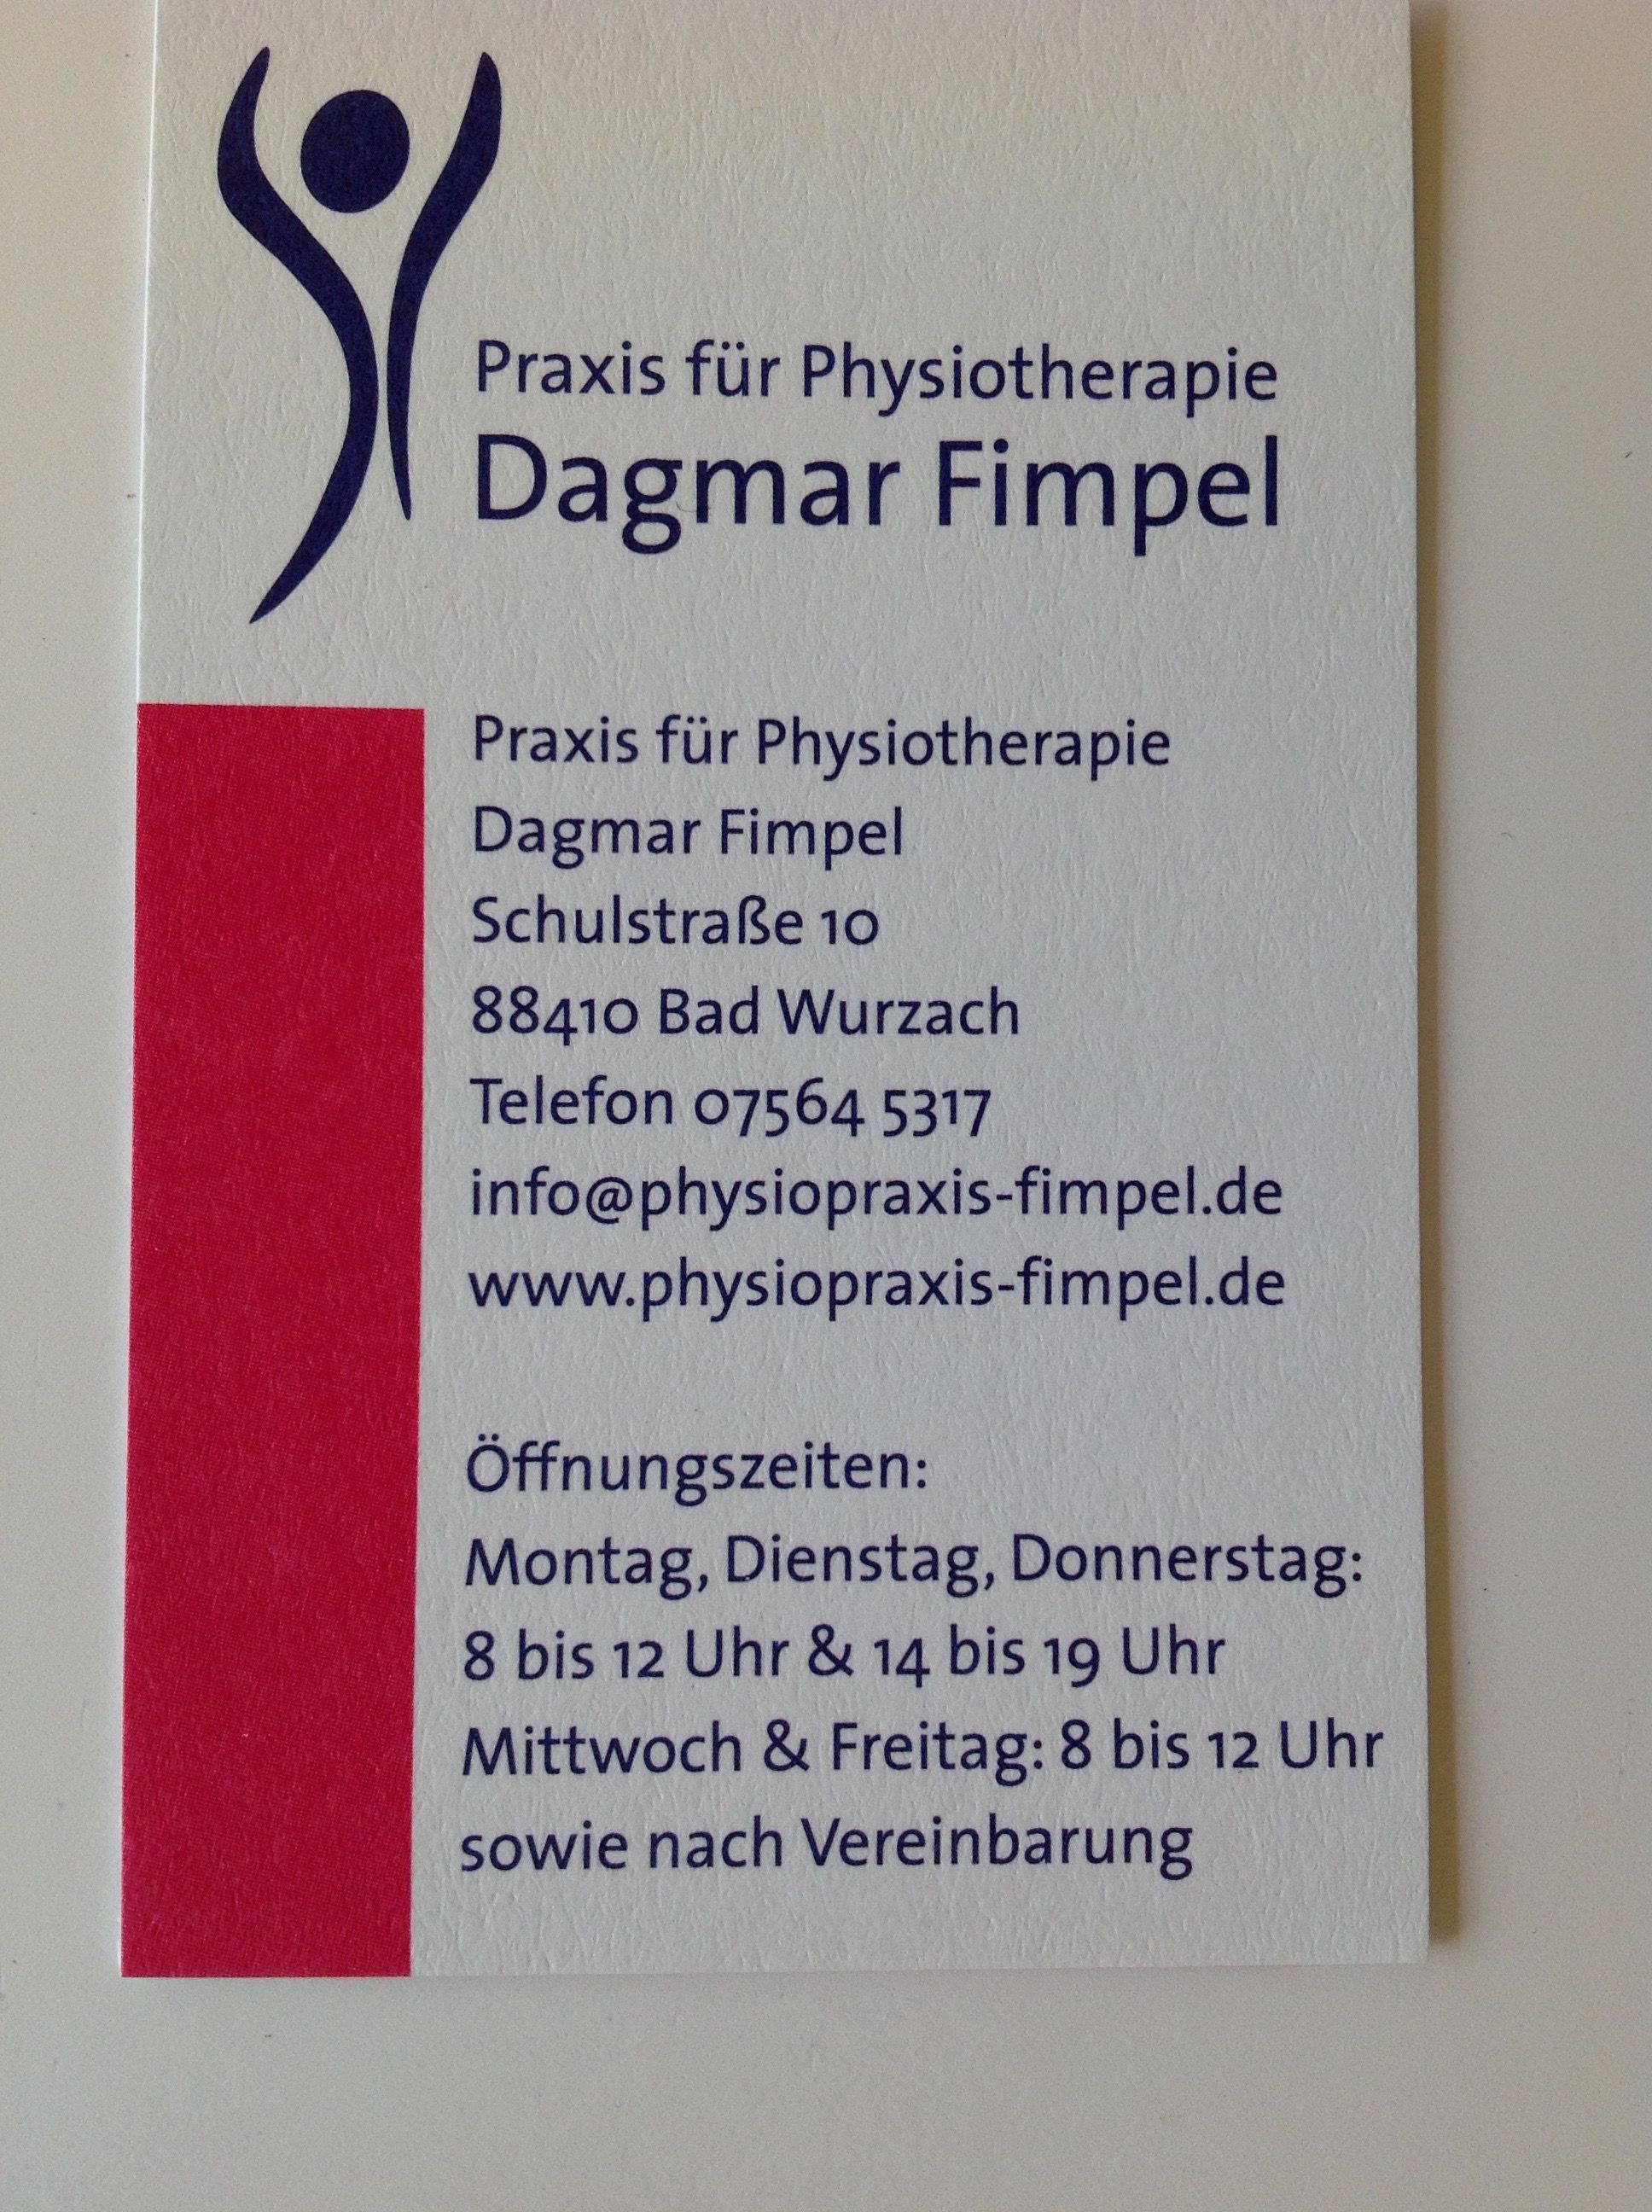 Praxis für Physiotherapie Dagmar Fimpel